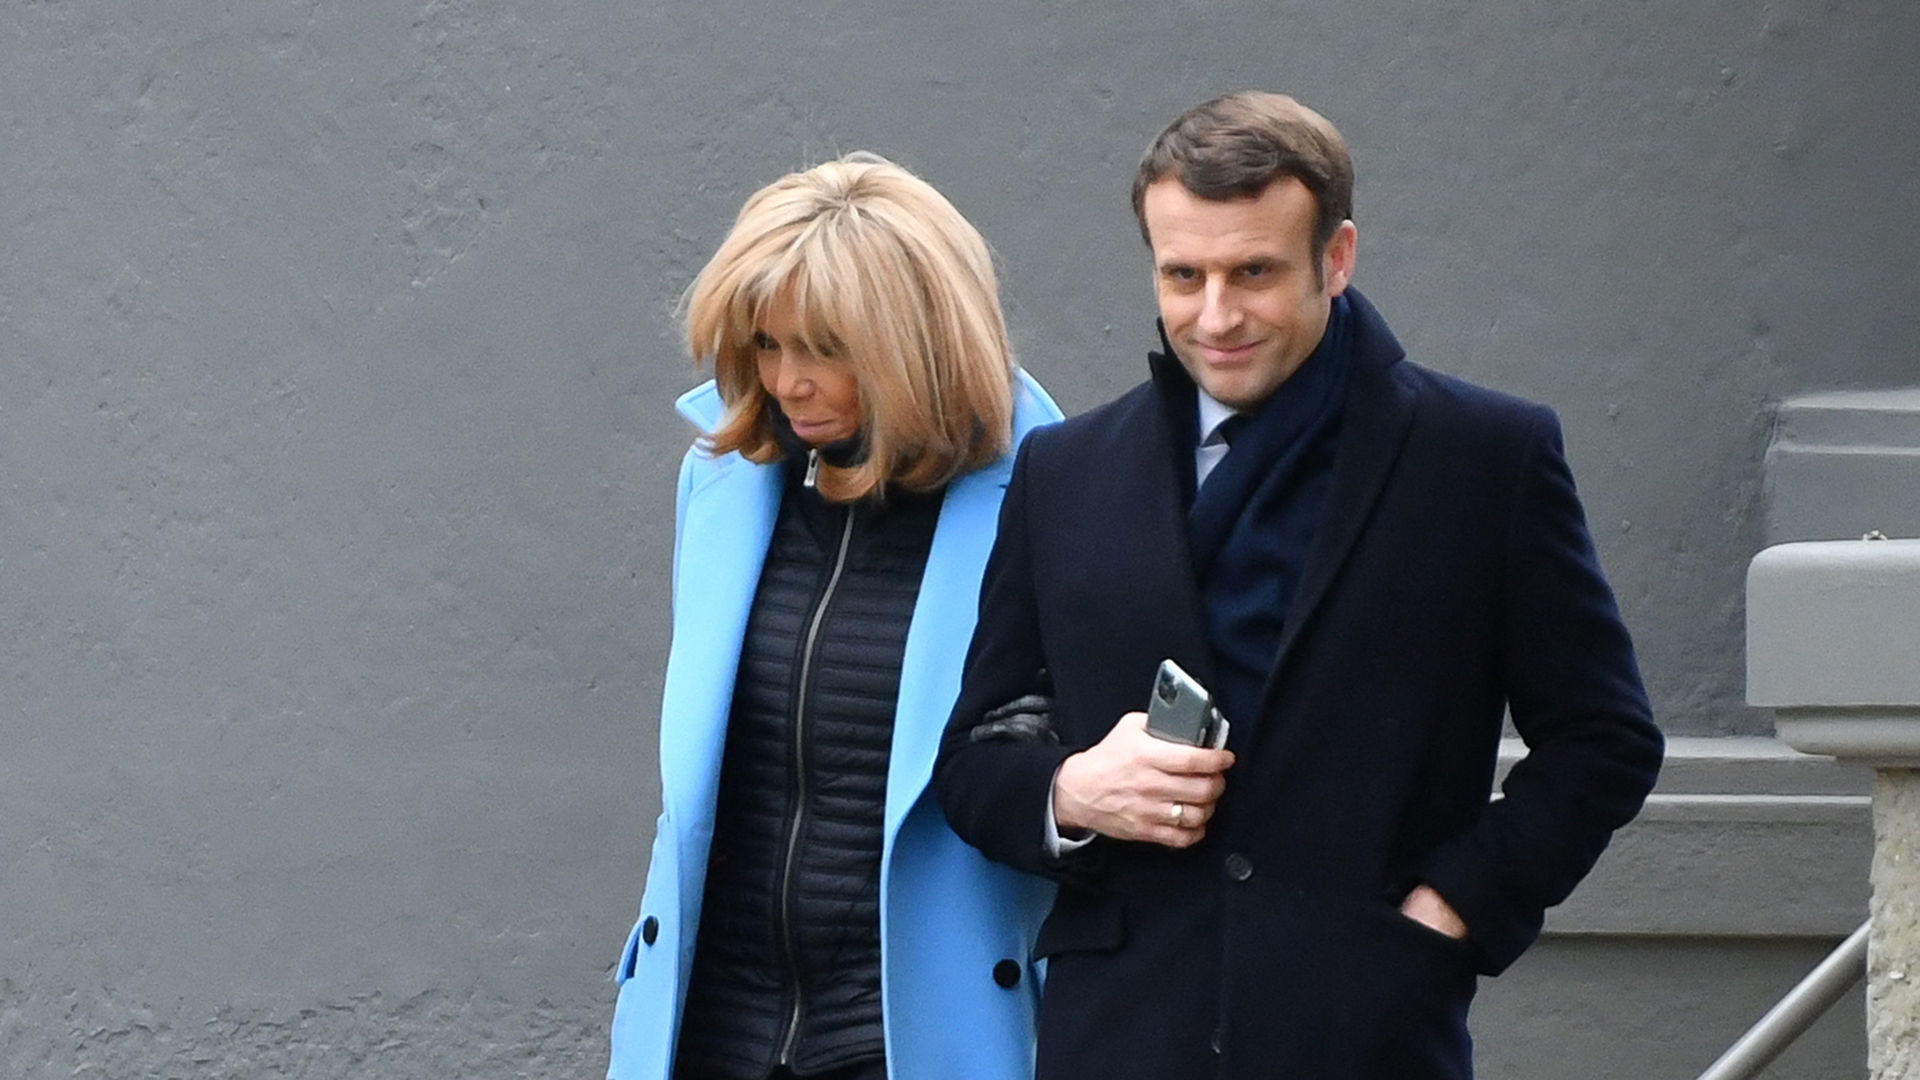 Emmanuel Macron und Brigitte Macron | picture alliance / abaca